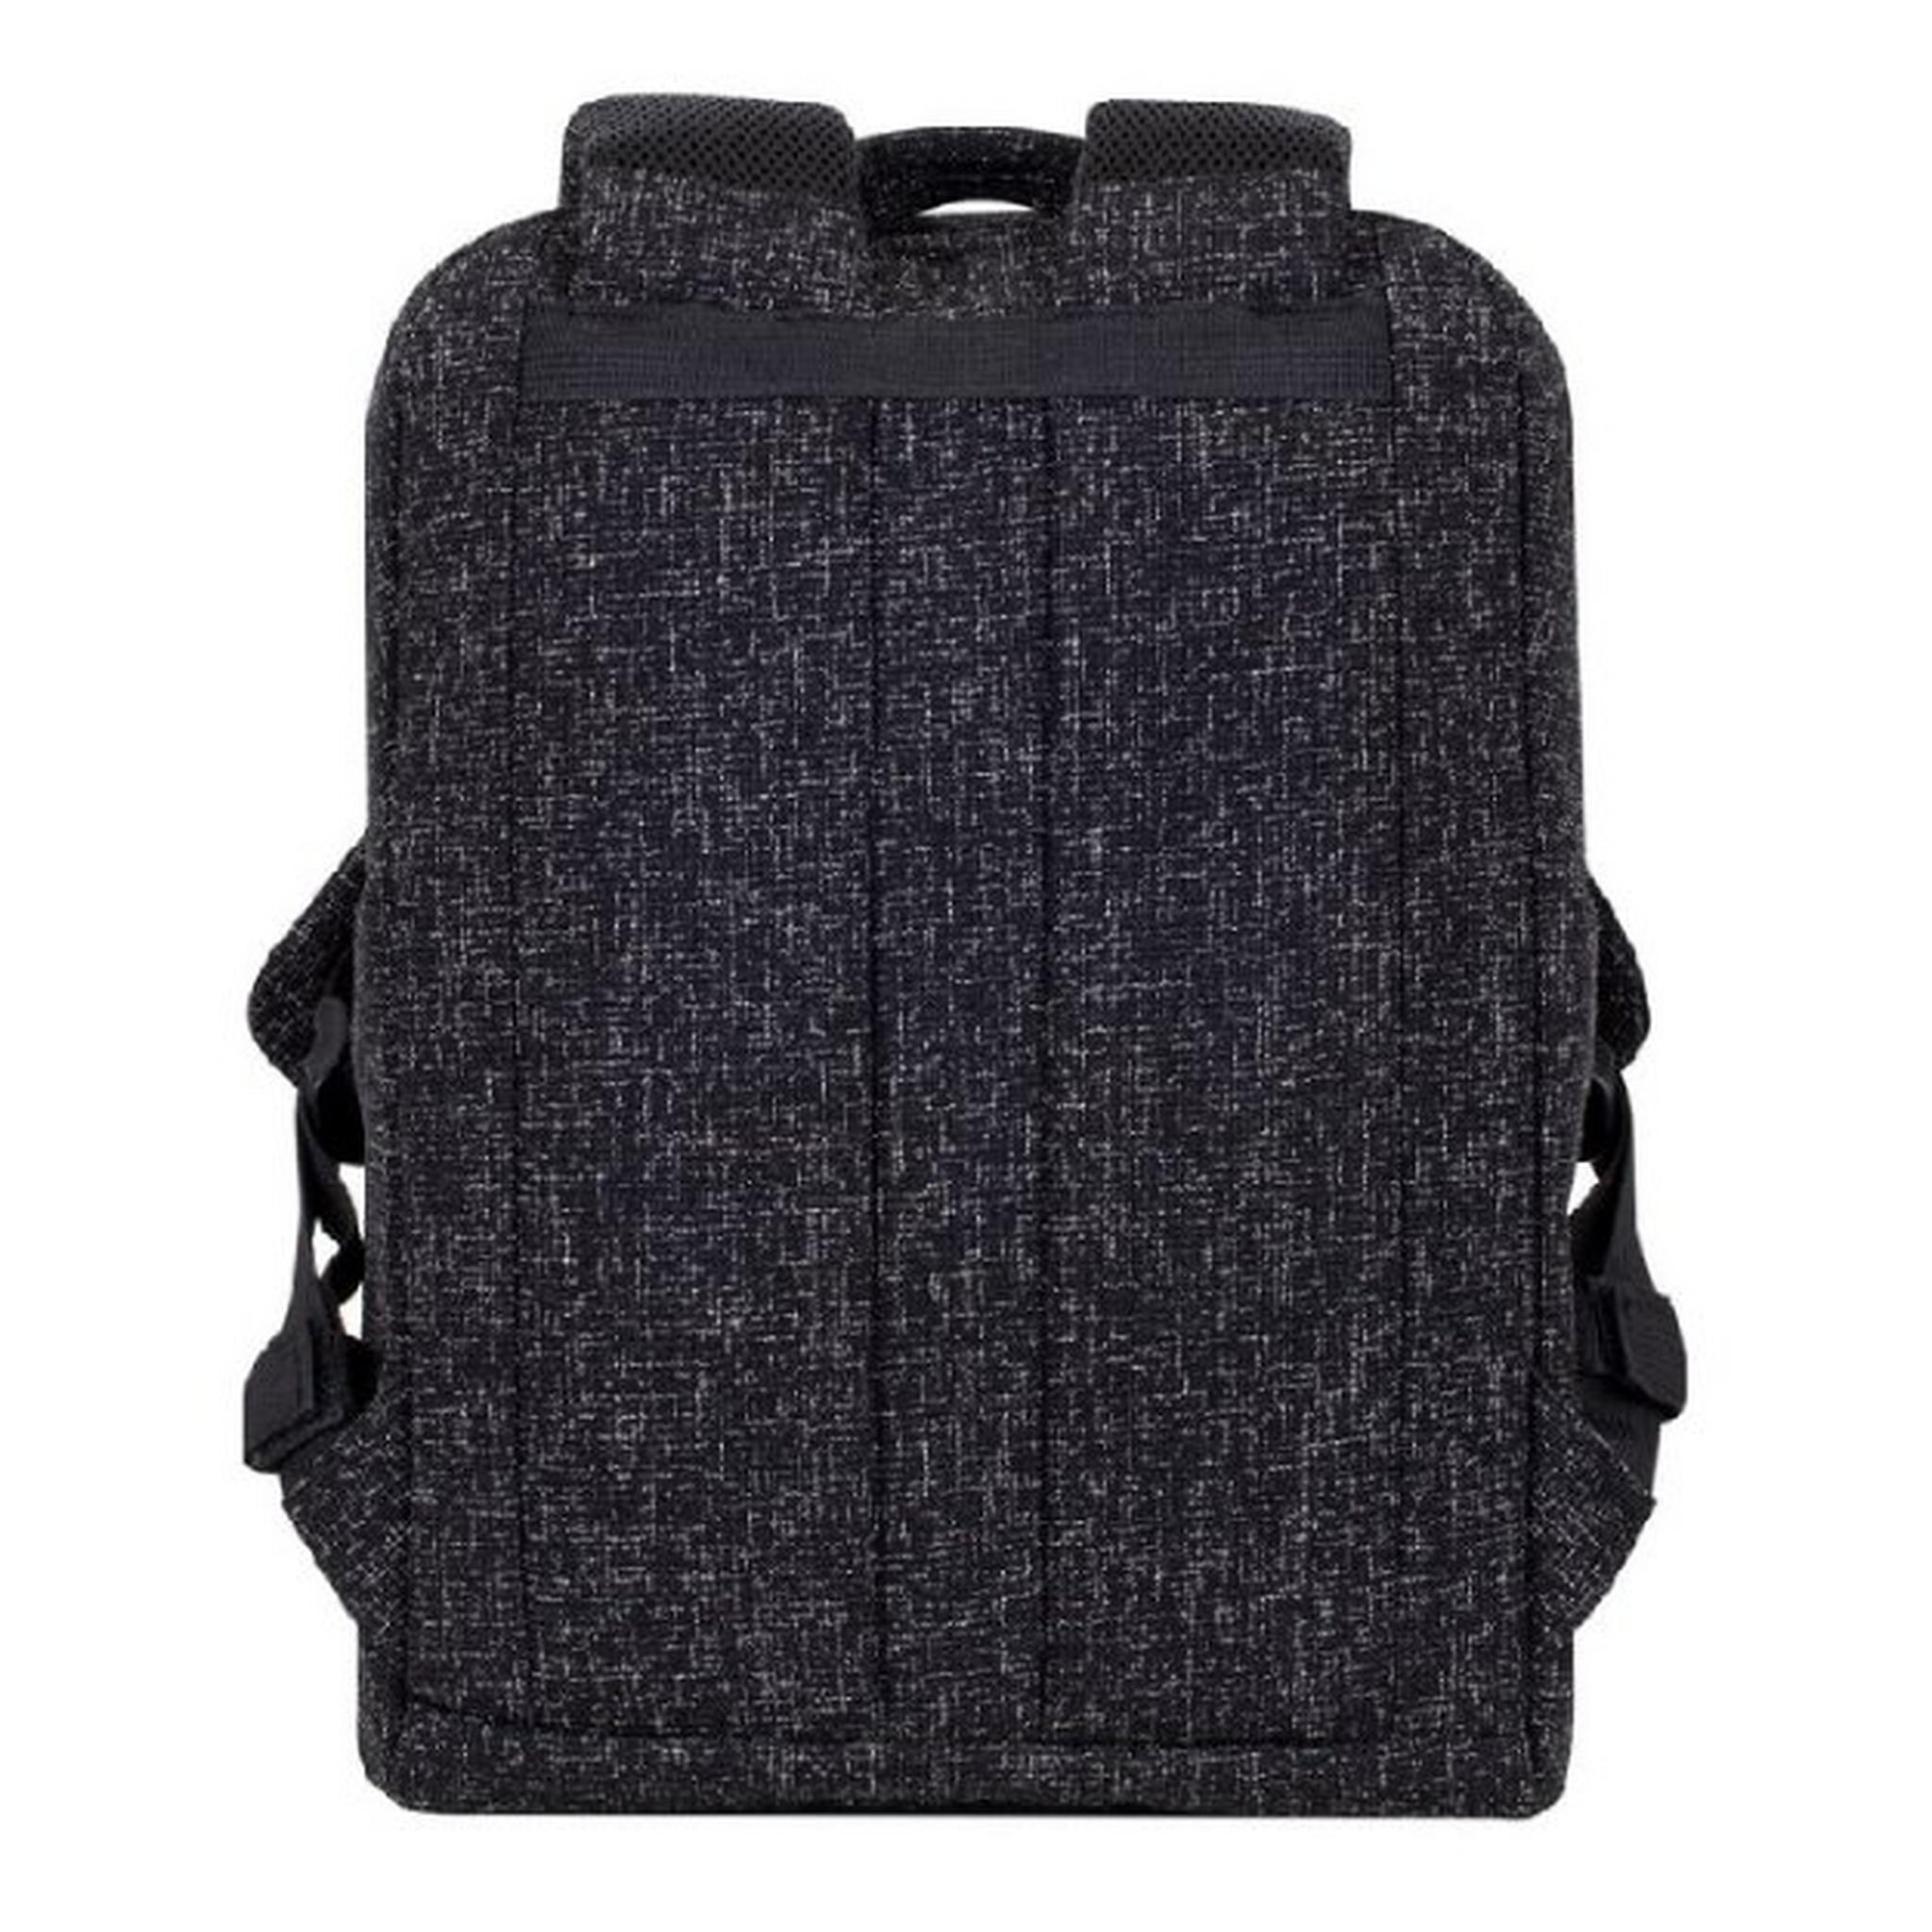 Riva Anvik Laptop Backpack, 13.3inch, 7923 – Black